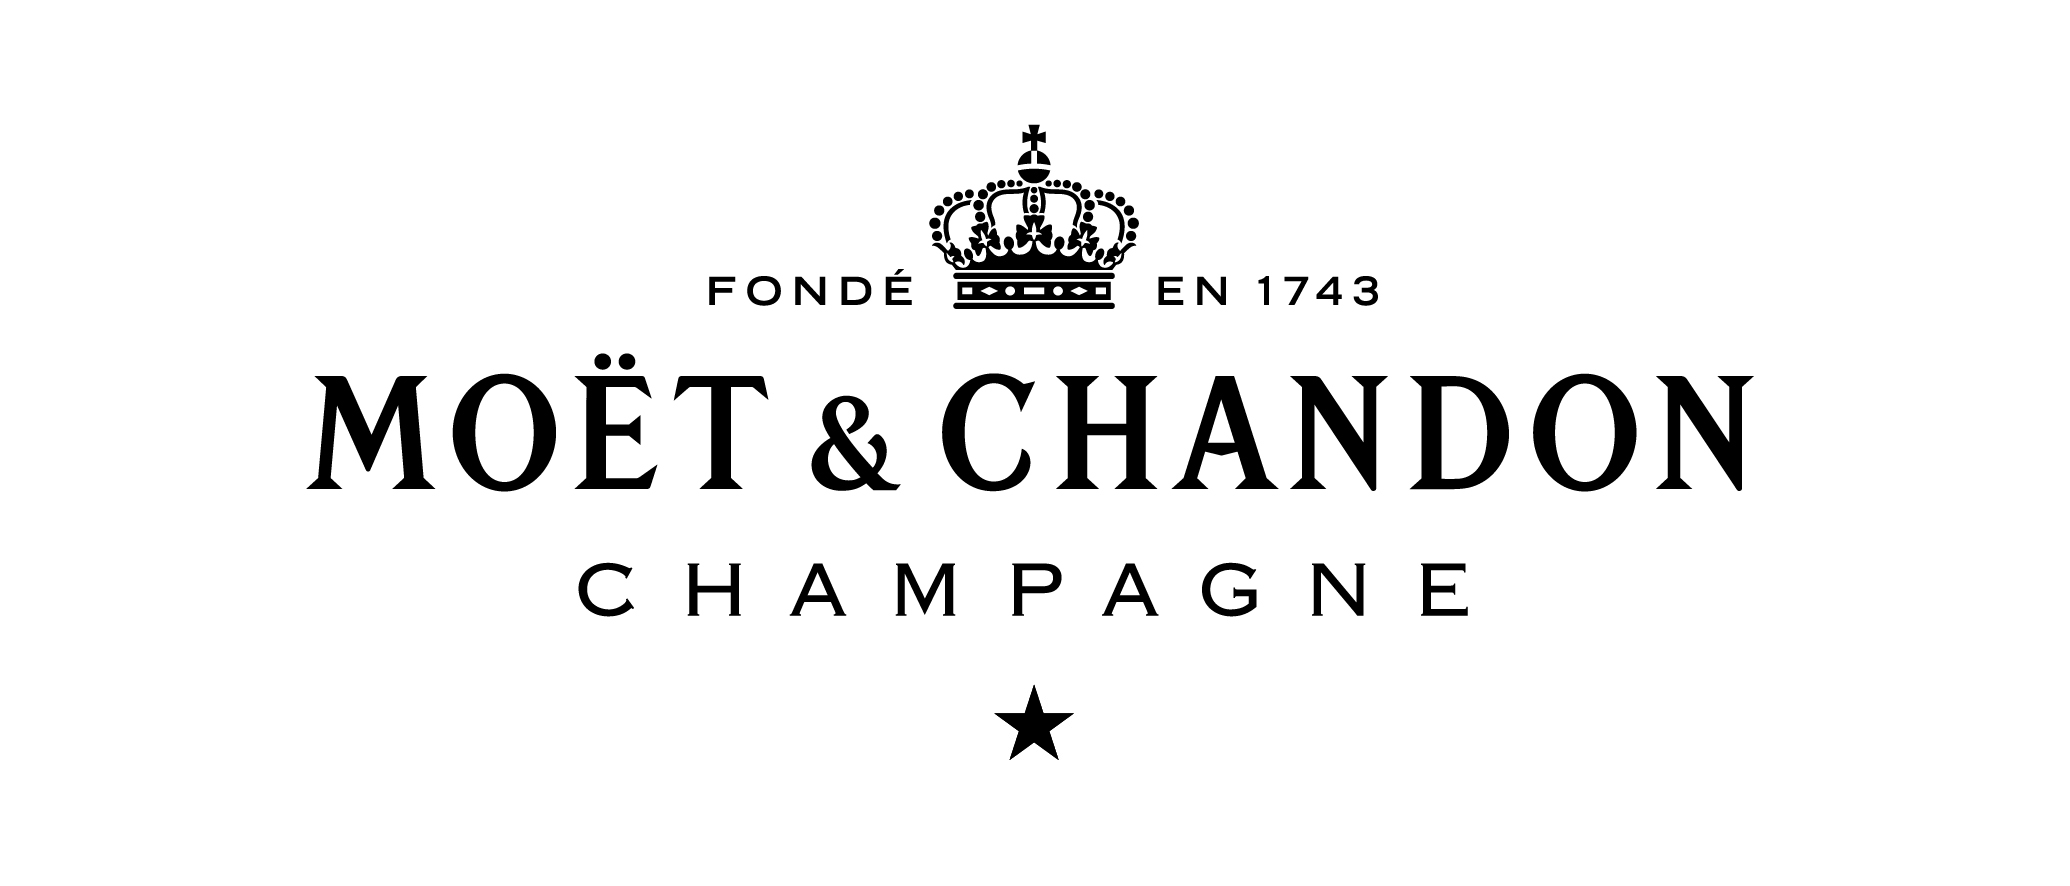 Sold at Auction: Moët et Chandon, Brut Imperial Champagne